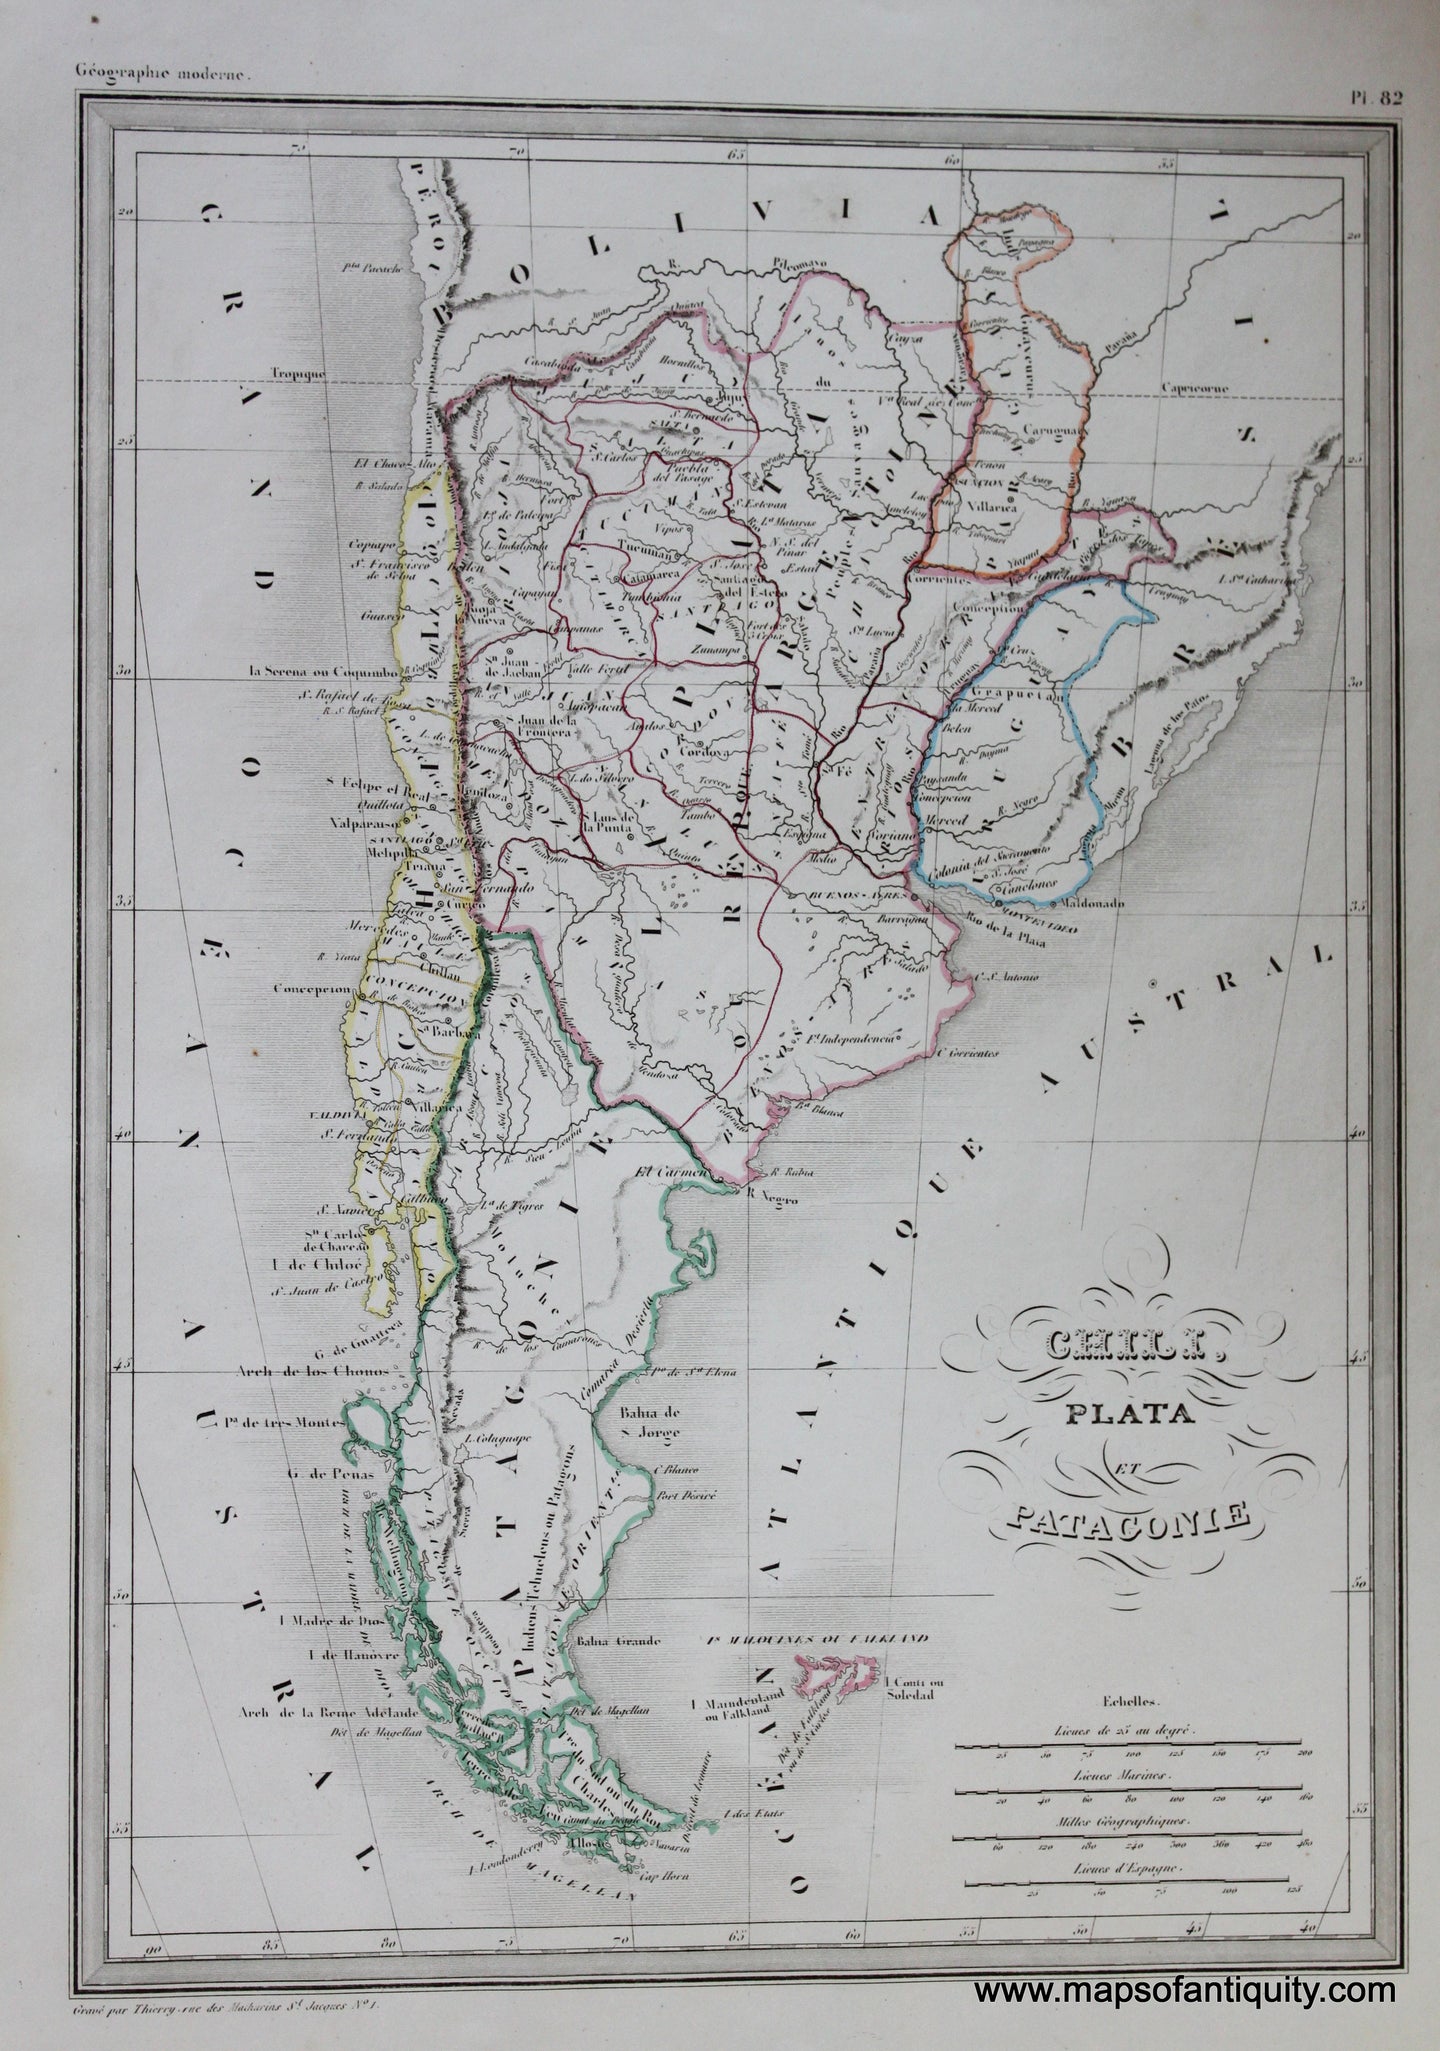 Antique-Hand-Colored-Map-Chili-Plata-et-Patagonie-Caribbean-&Latin-America-South-America-1846-M.-Malte-Brun-Maps-Of-Antiquity